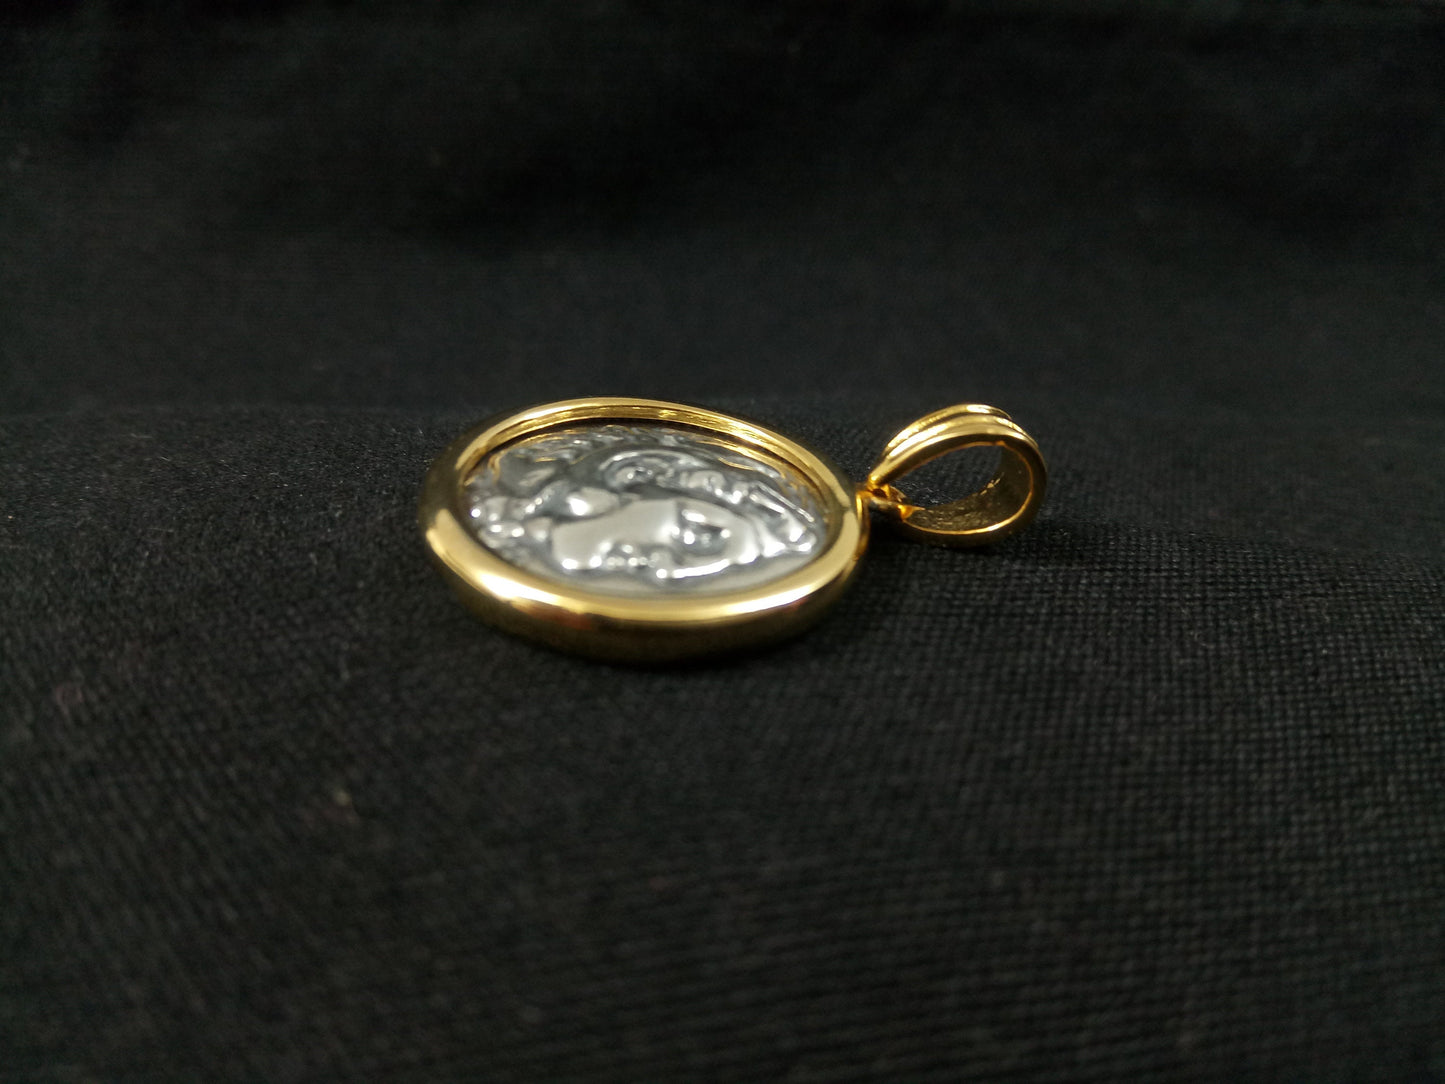 Alexander der Große vergoldeter Silberanhänger 21 mm